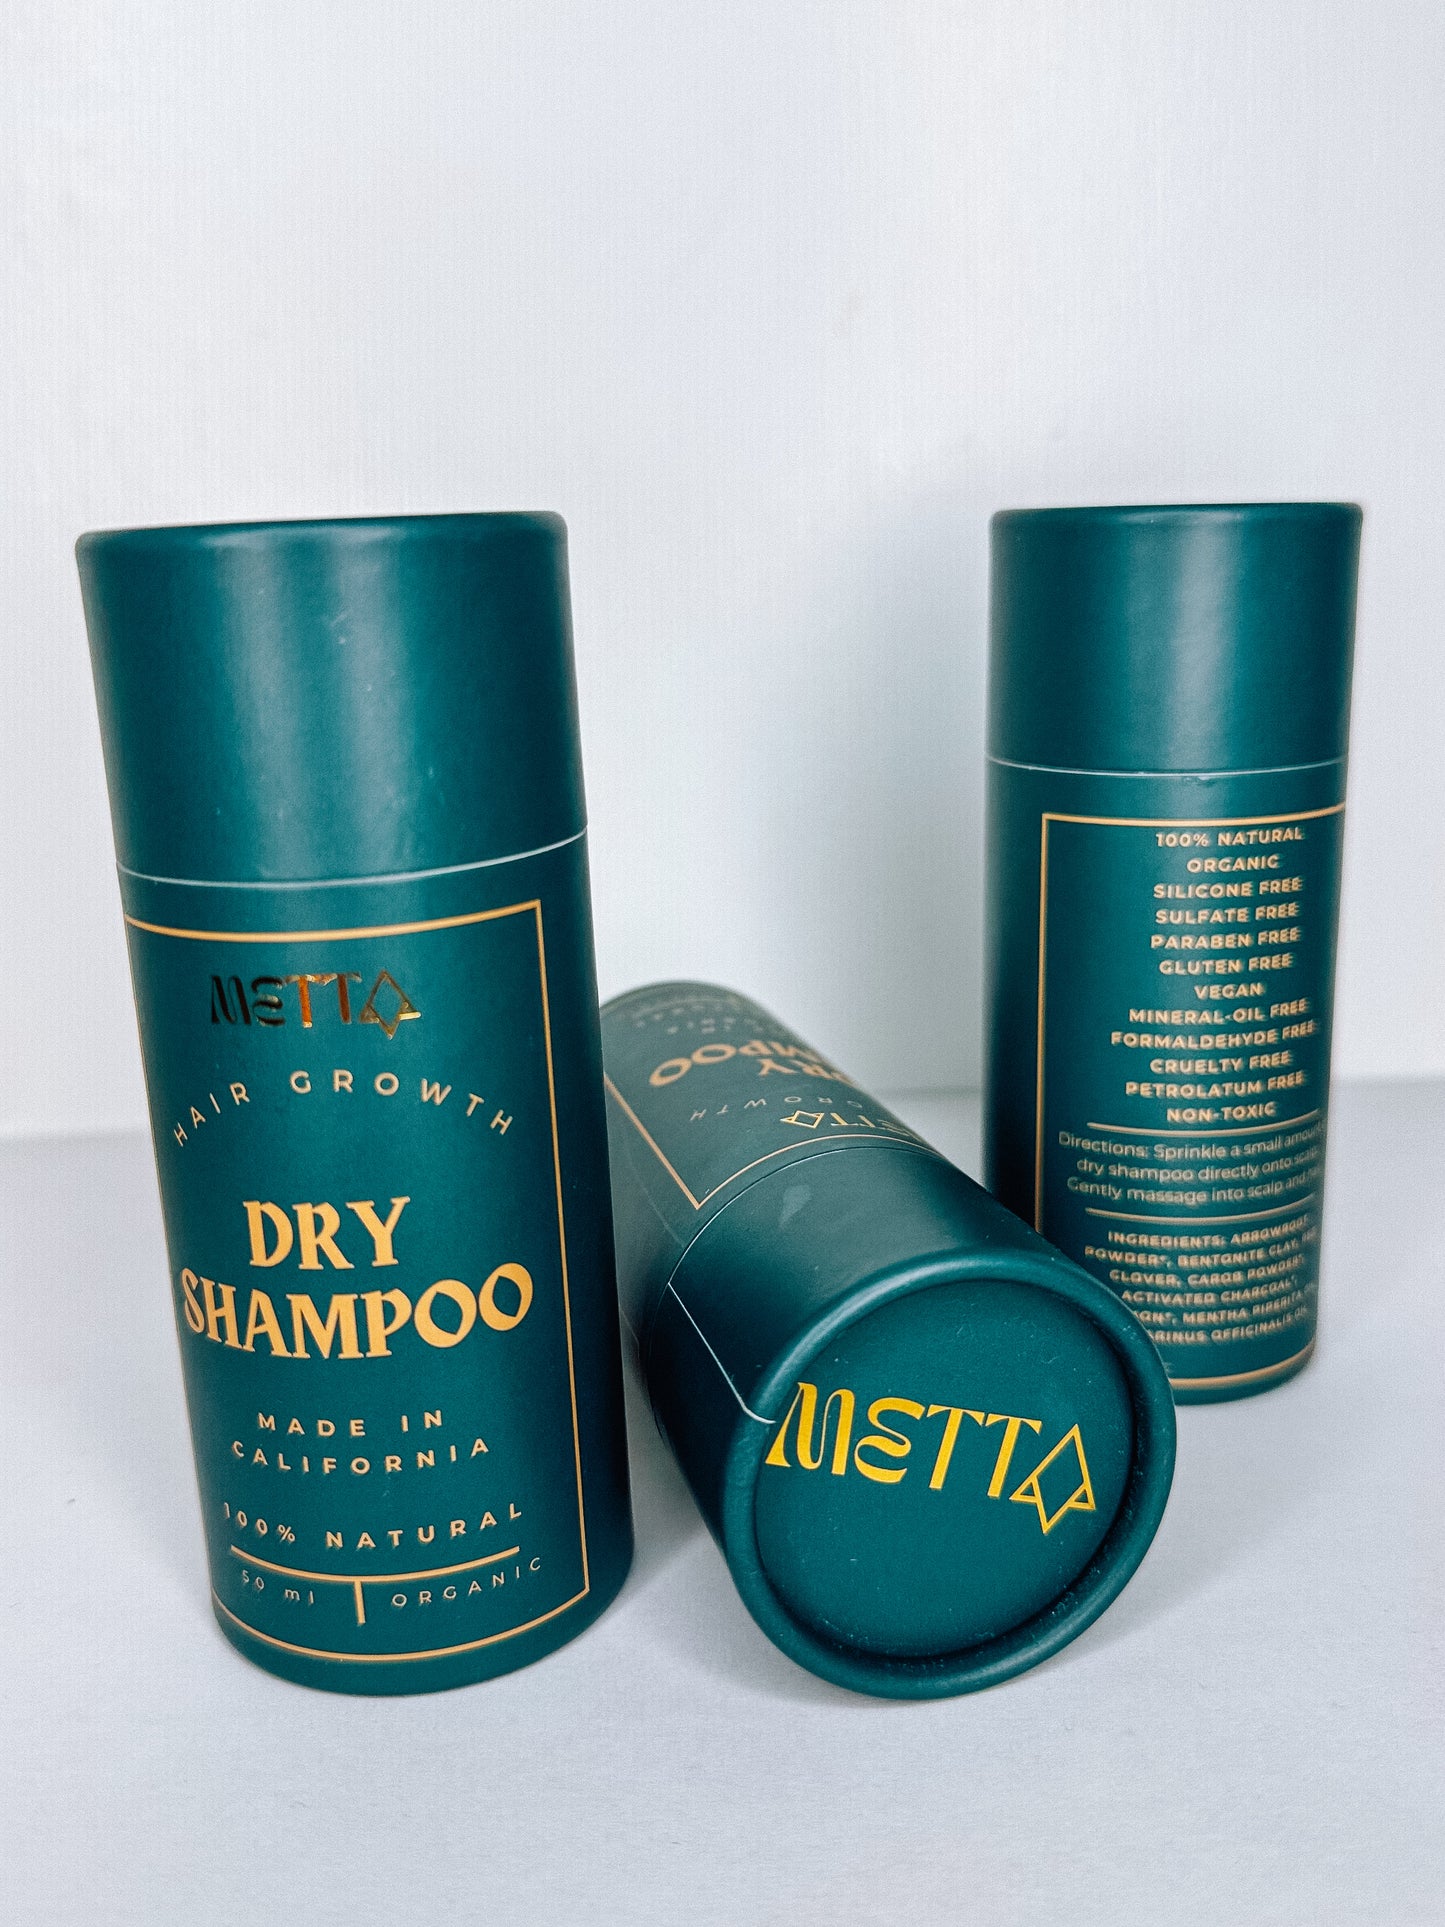 Hair Growth Dry Shampoo